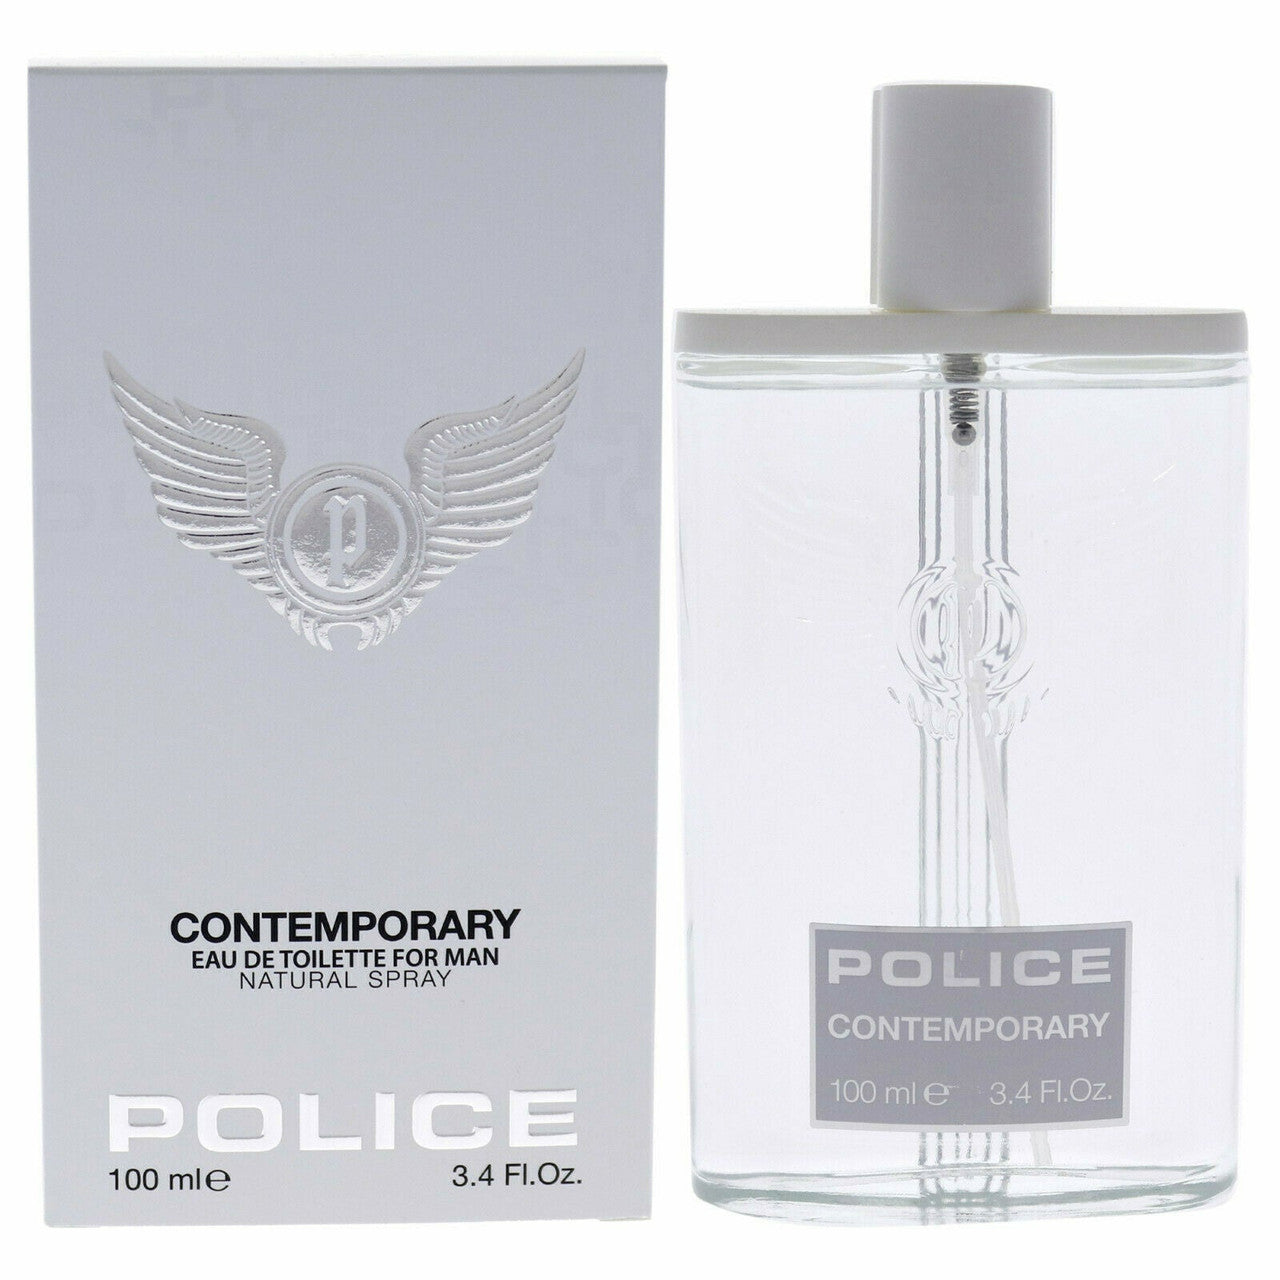 Police Contemporary Eau de Toilette Spray - 100ml